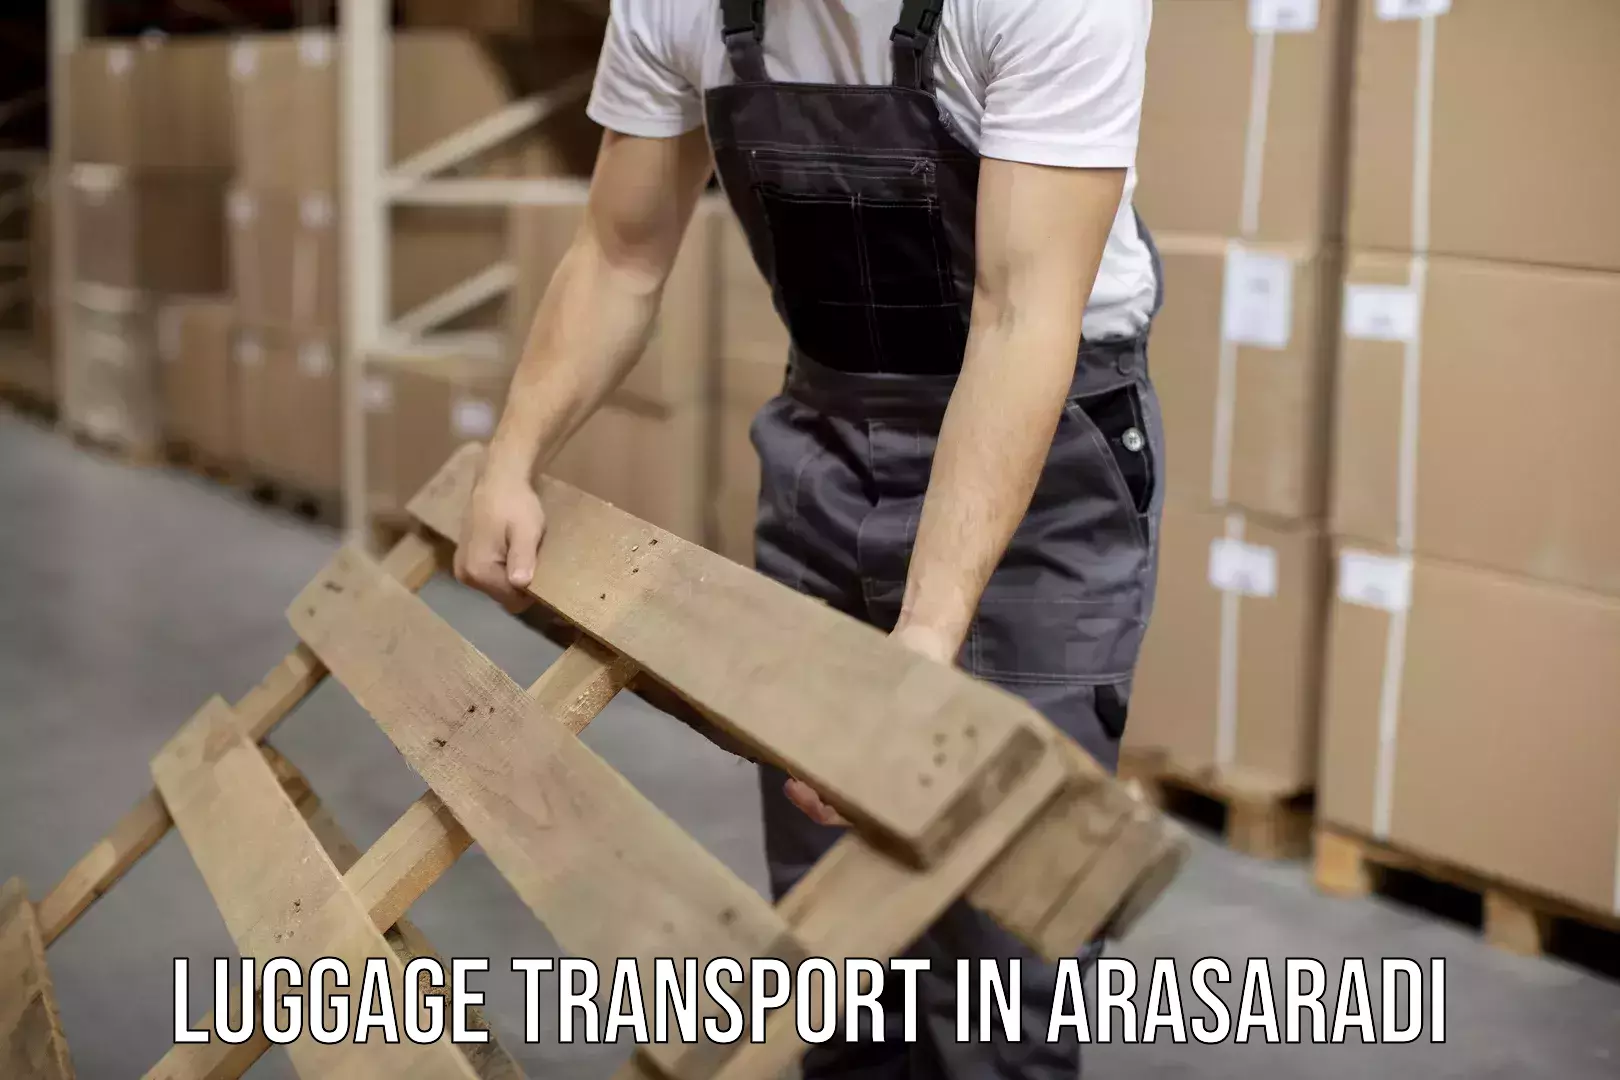 Luggage transport rates in Arasaradi